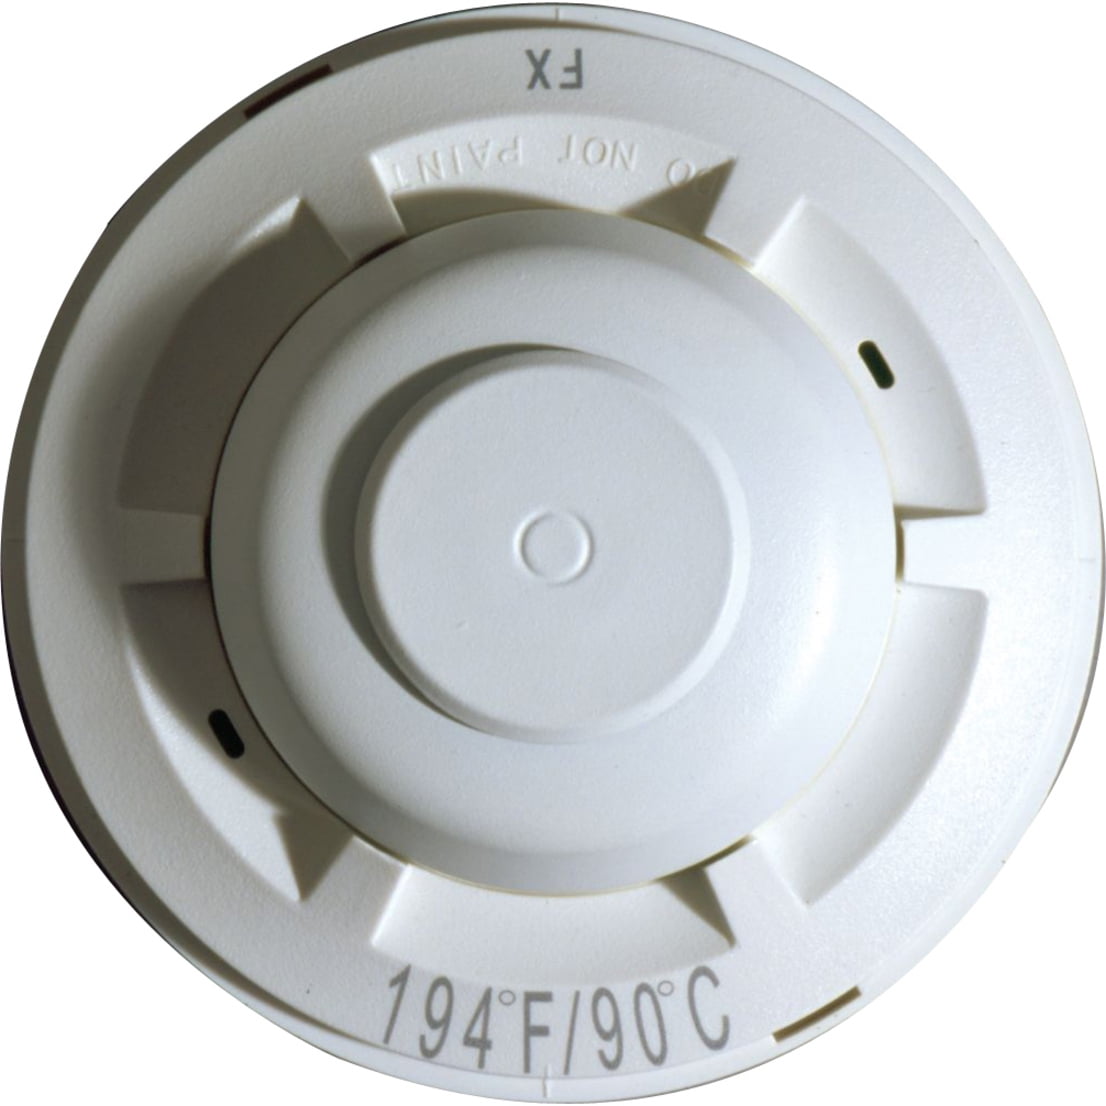 Ring 4SF1S8-0EN0 Alarm Flood and Freeze Sensor - Thermistor